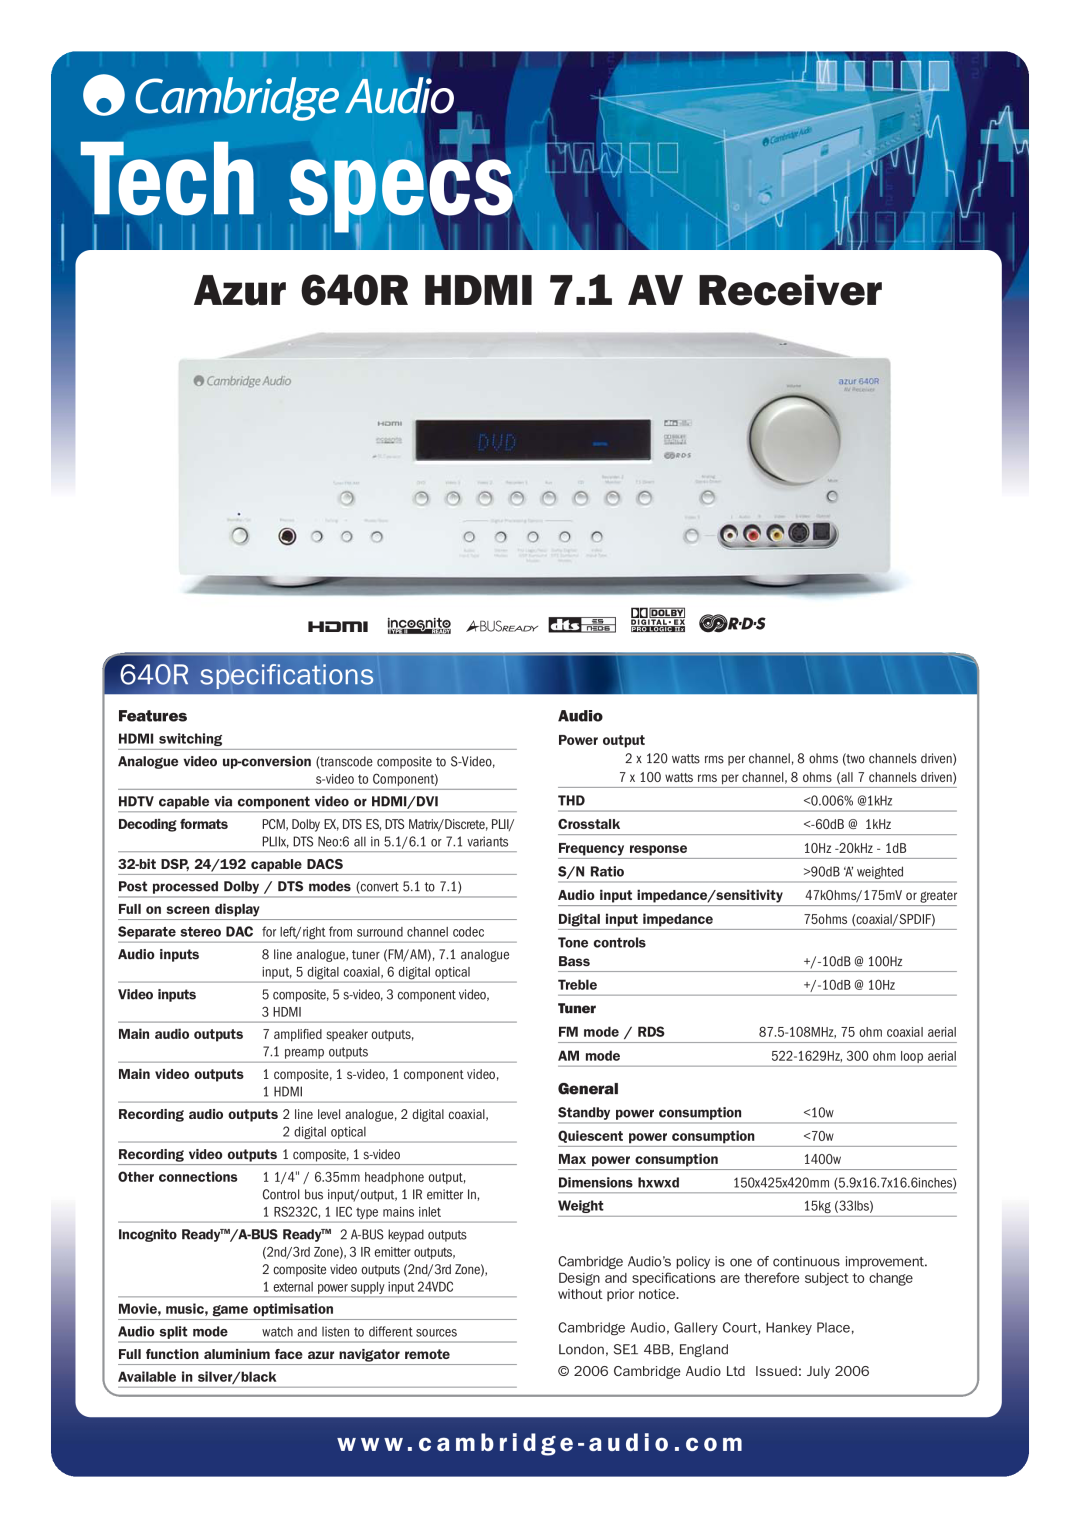 Cambridge Audio specifications Azur 640R HDMI 7.1 AV Receiver, Tech specs, 640R specifications, Features, Audio, Tuner 